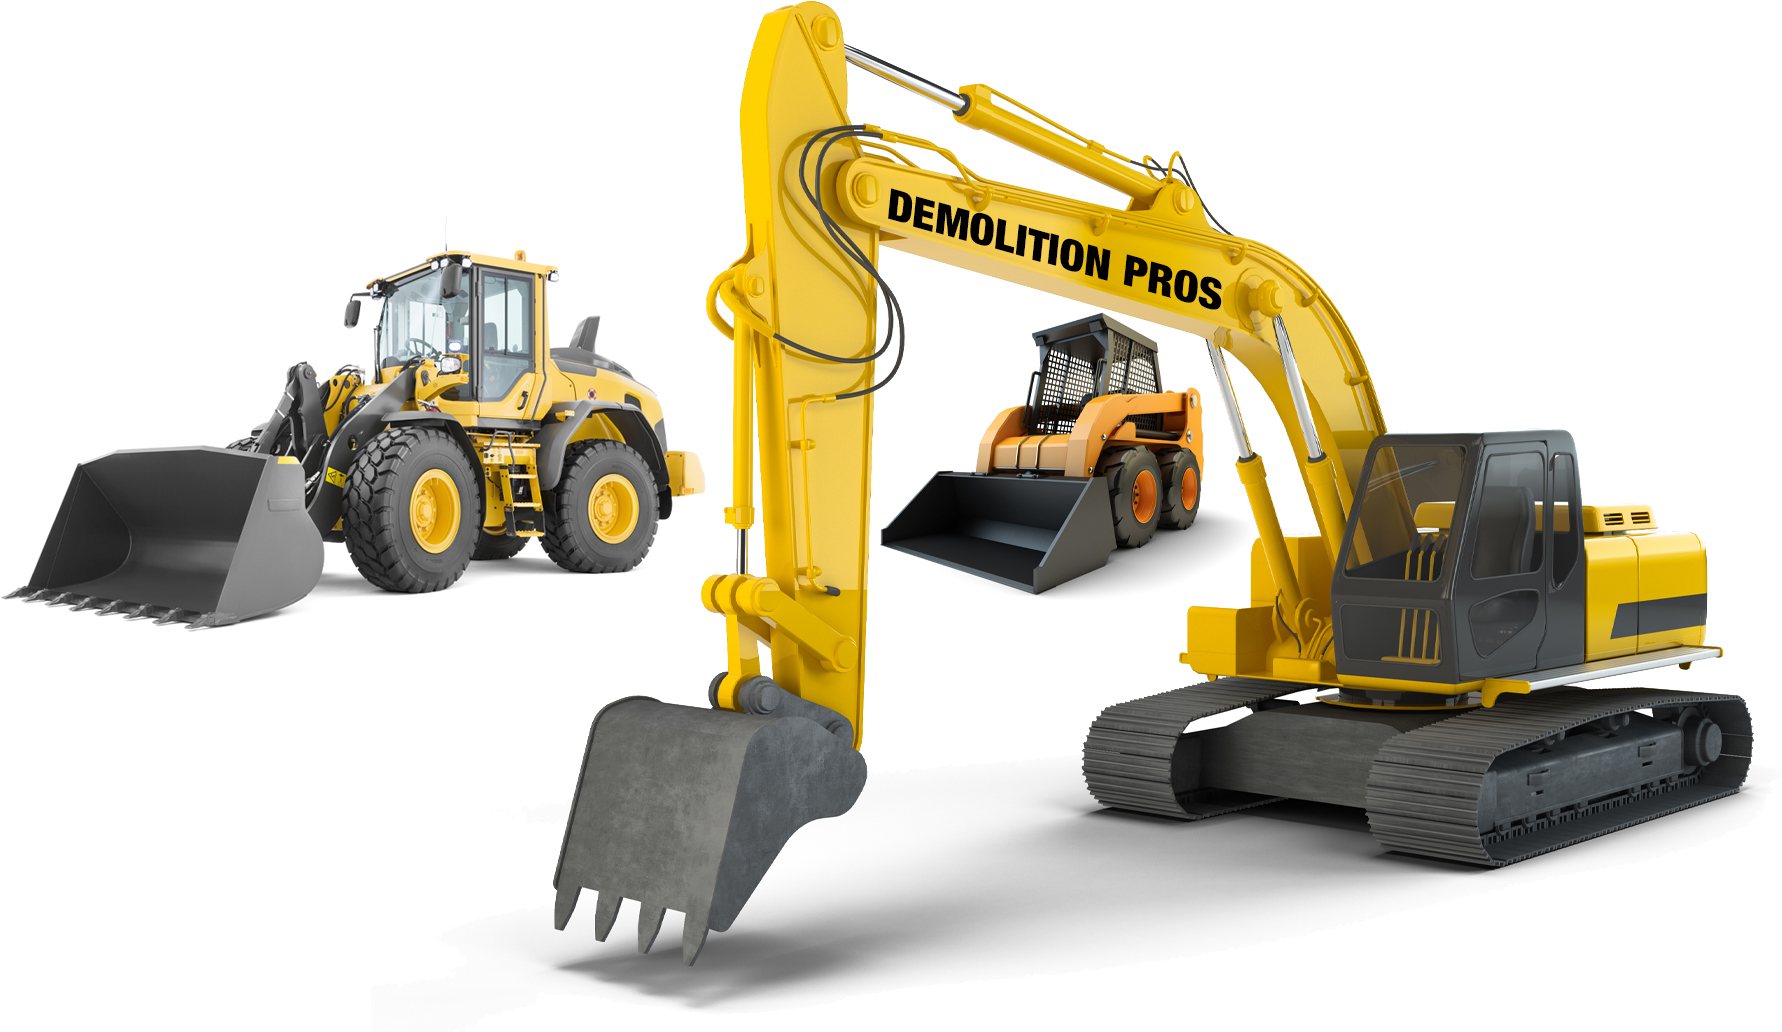 Demolition Pros equipment